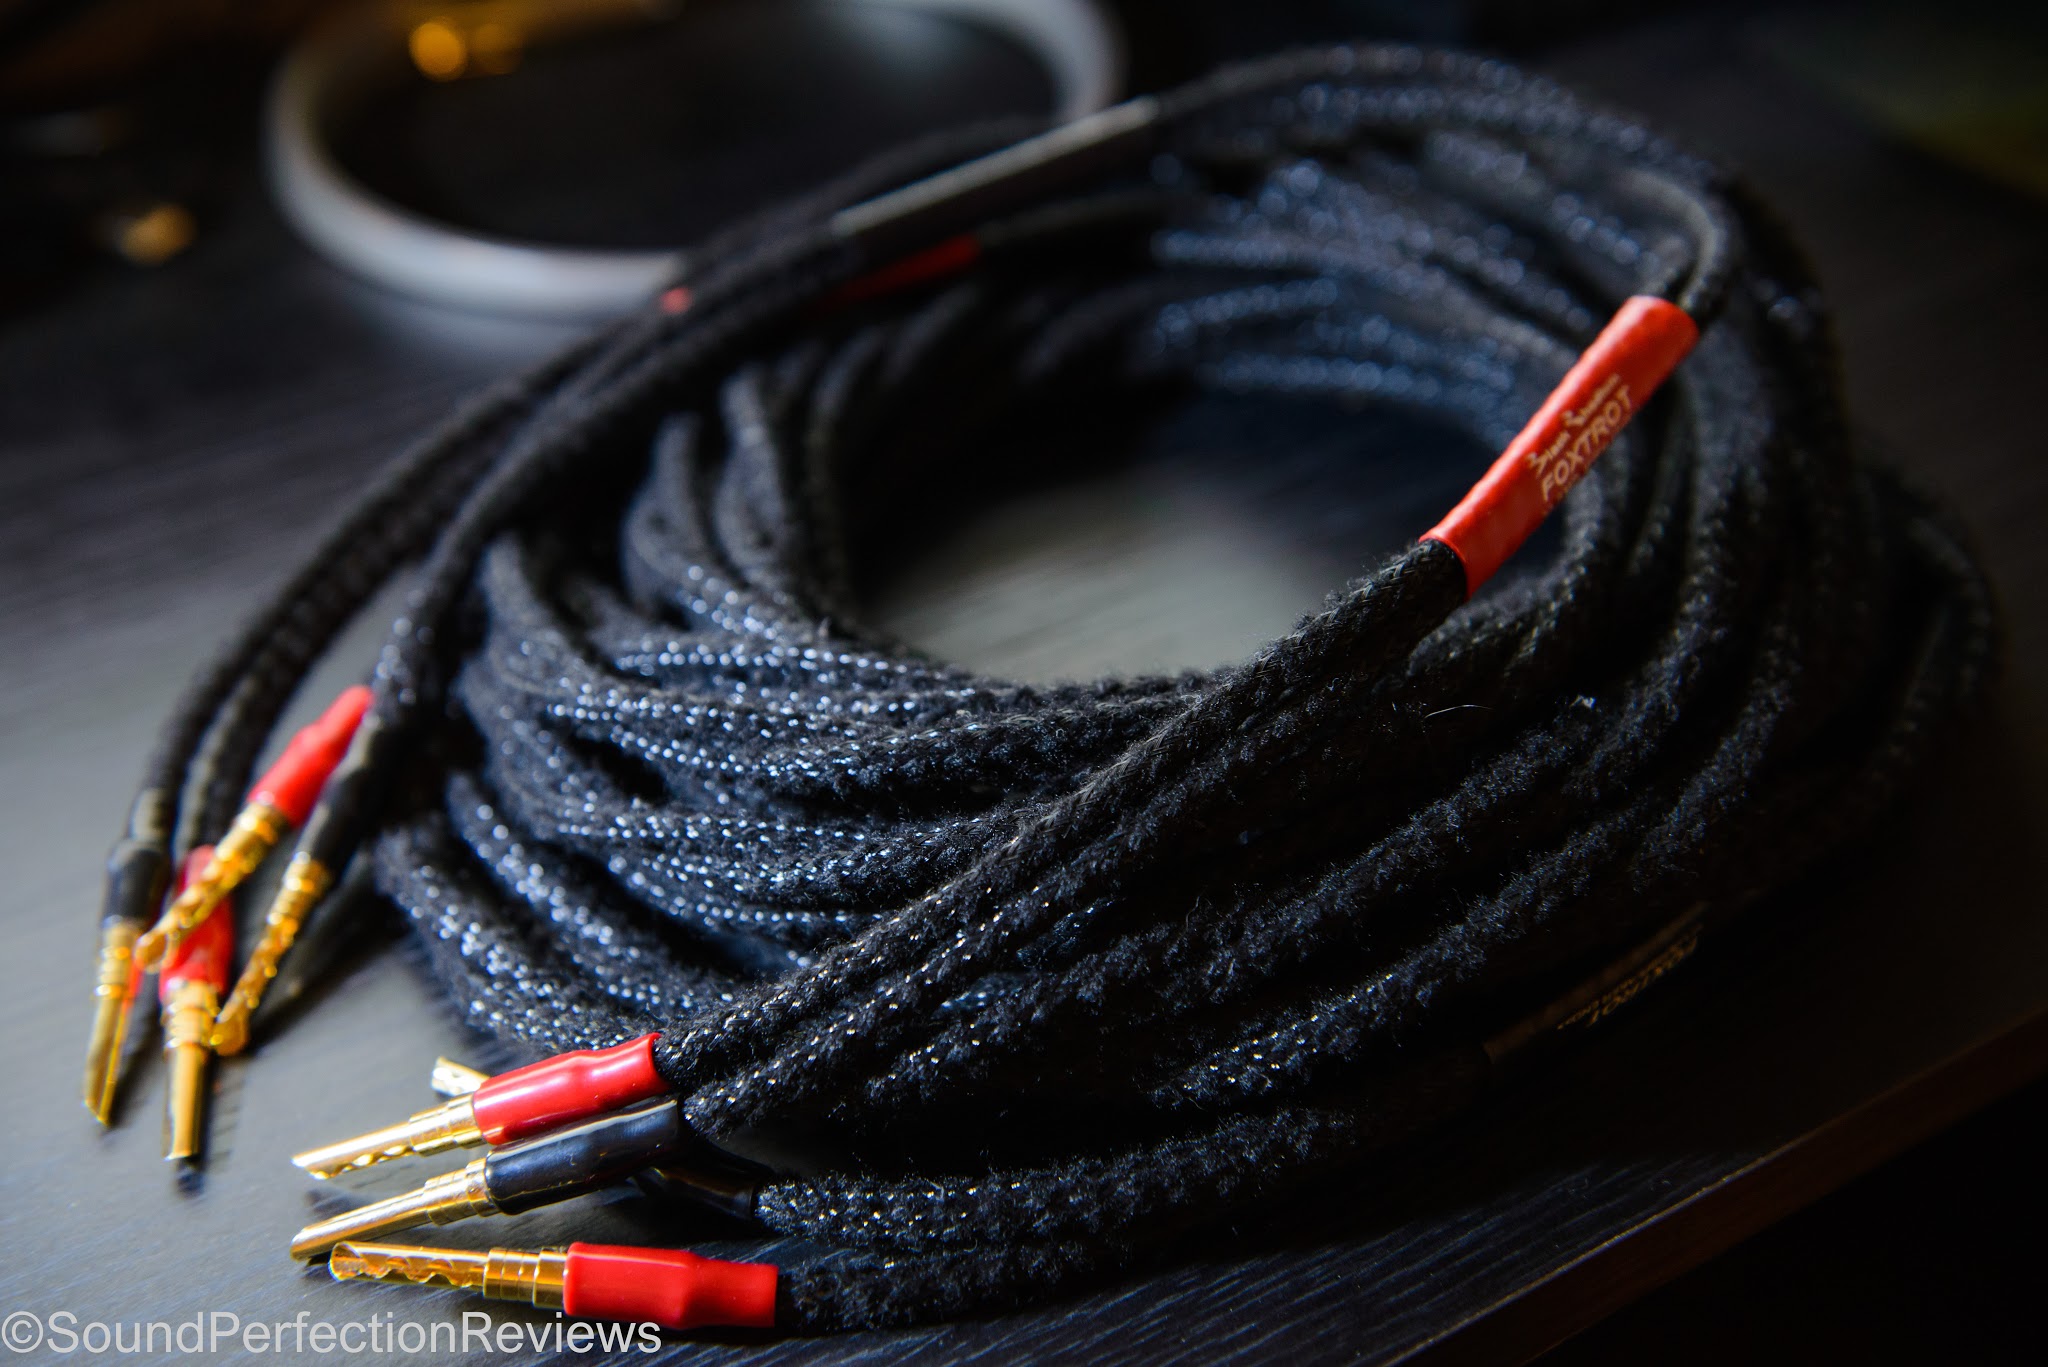 Review: Black Rhodium Speaker Cable